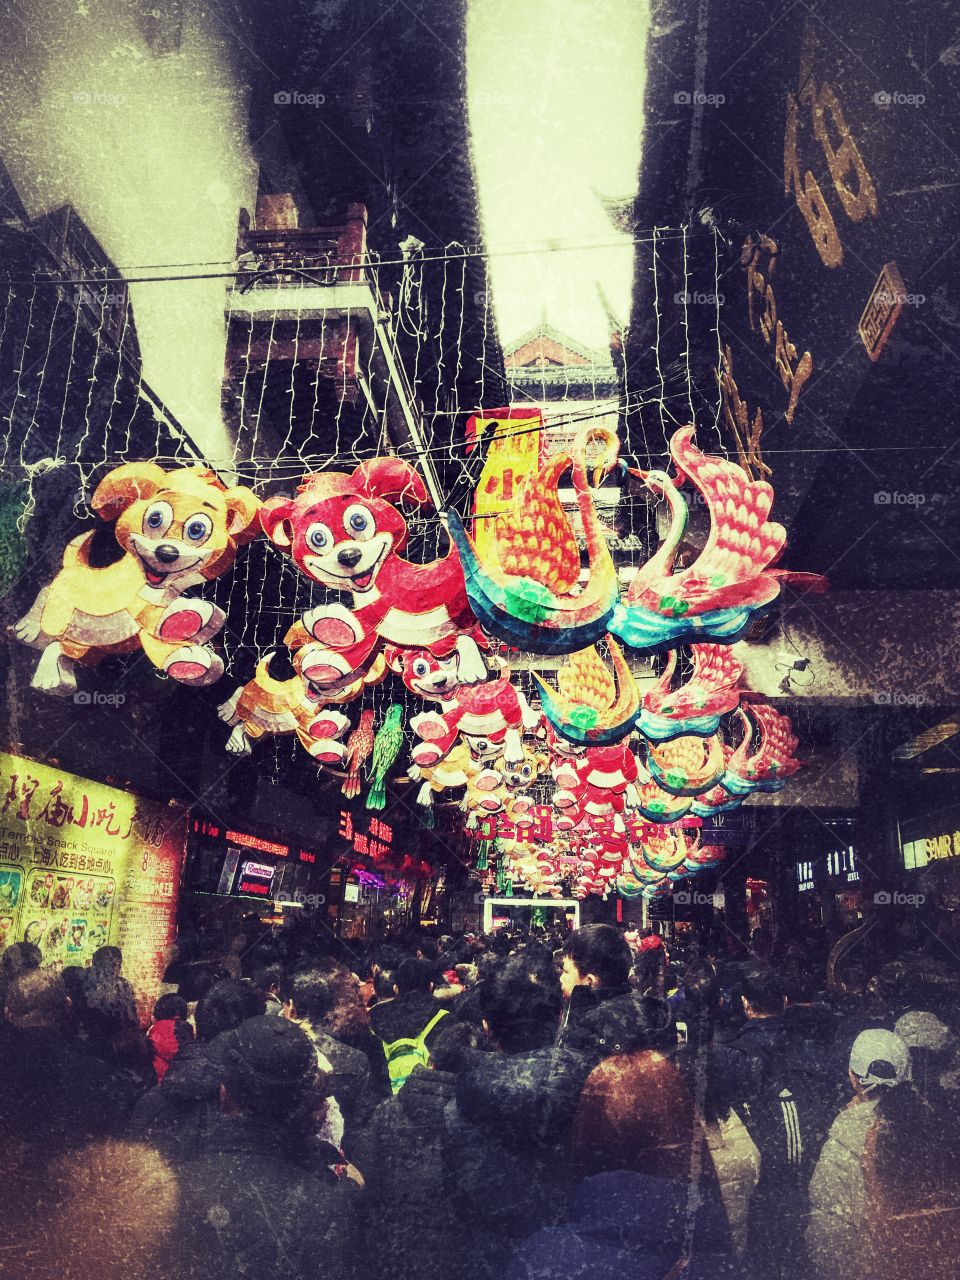 Shanghai Lantern Festival at YU Garden, 上海灯节在豫园。Year of the Dog!